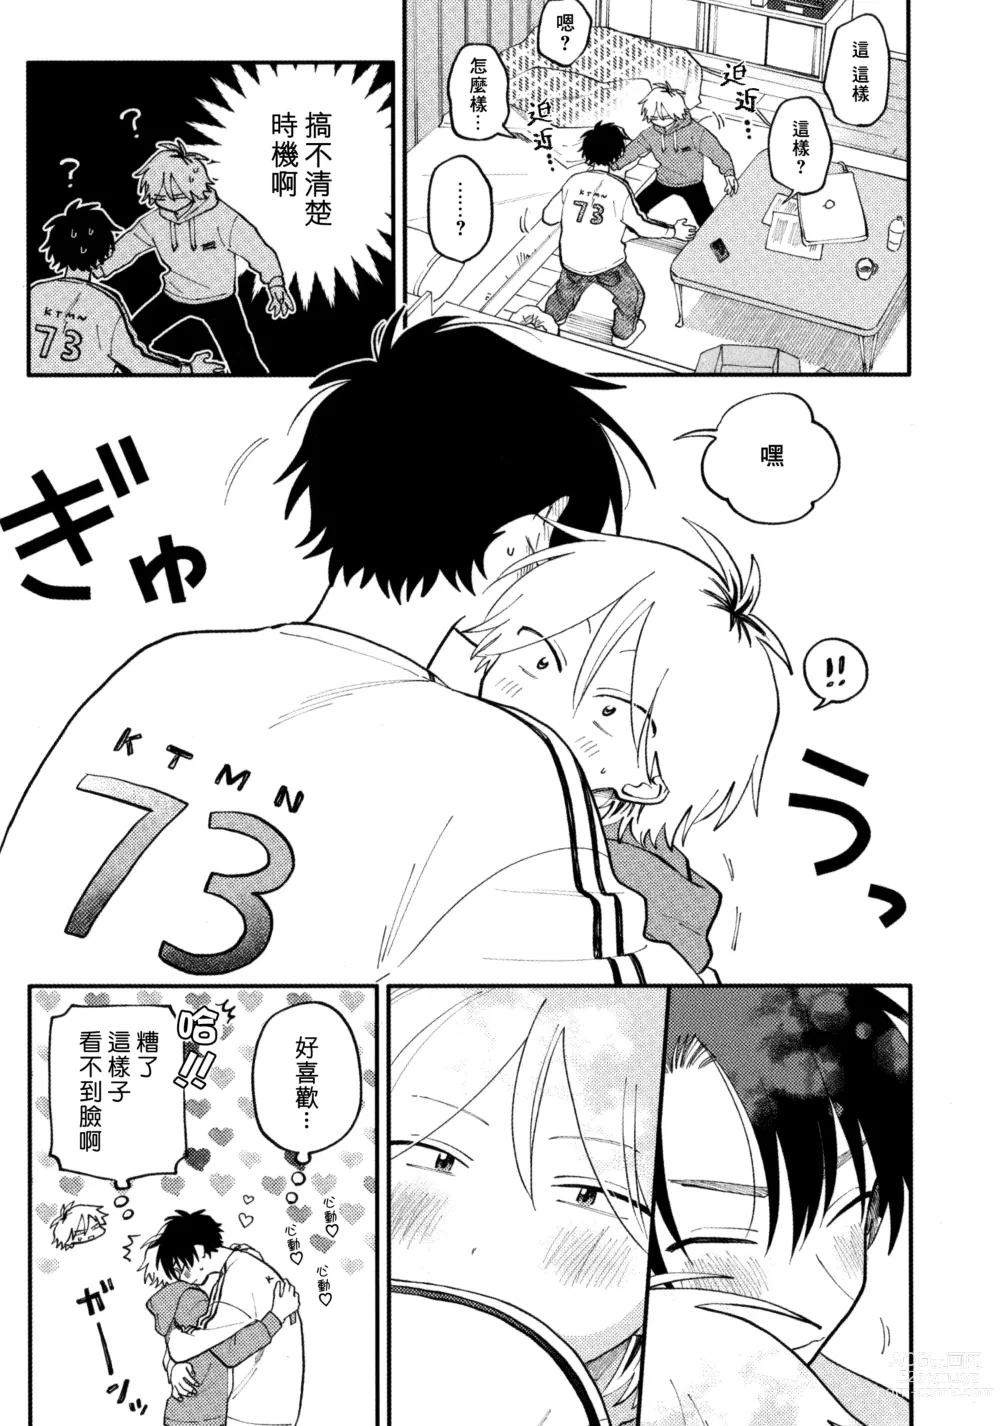 Page 237 of manga 北山君与南谷君